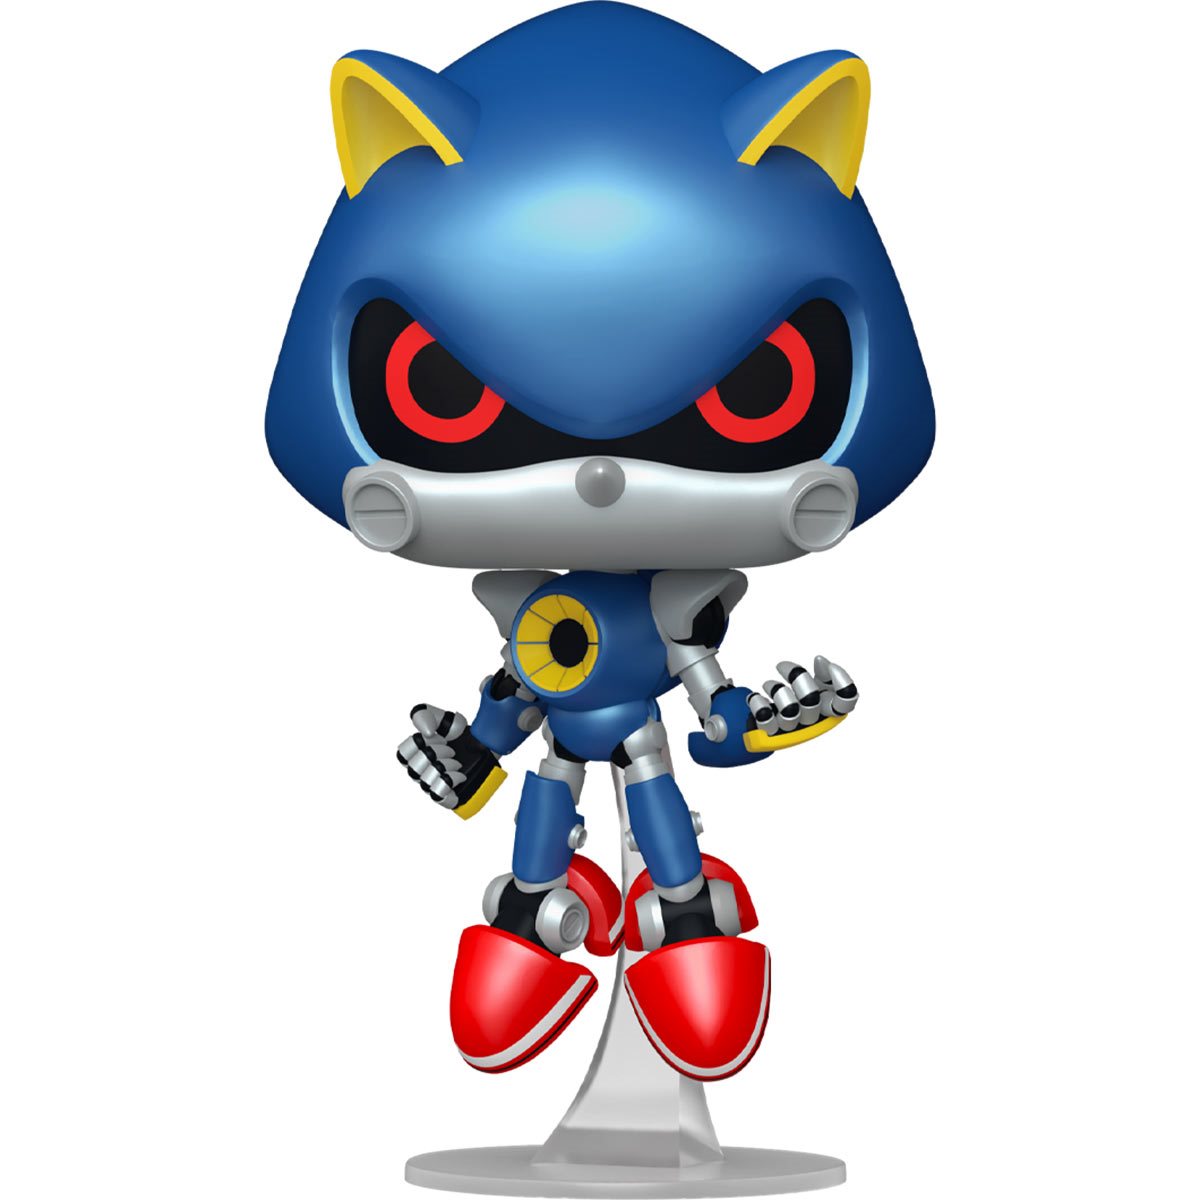 Funko Pop Games: Sonic - Metal Sonic